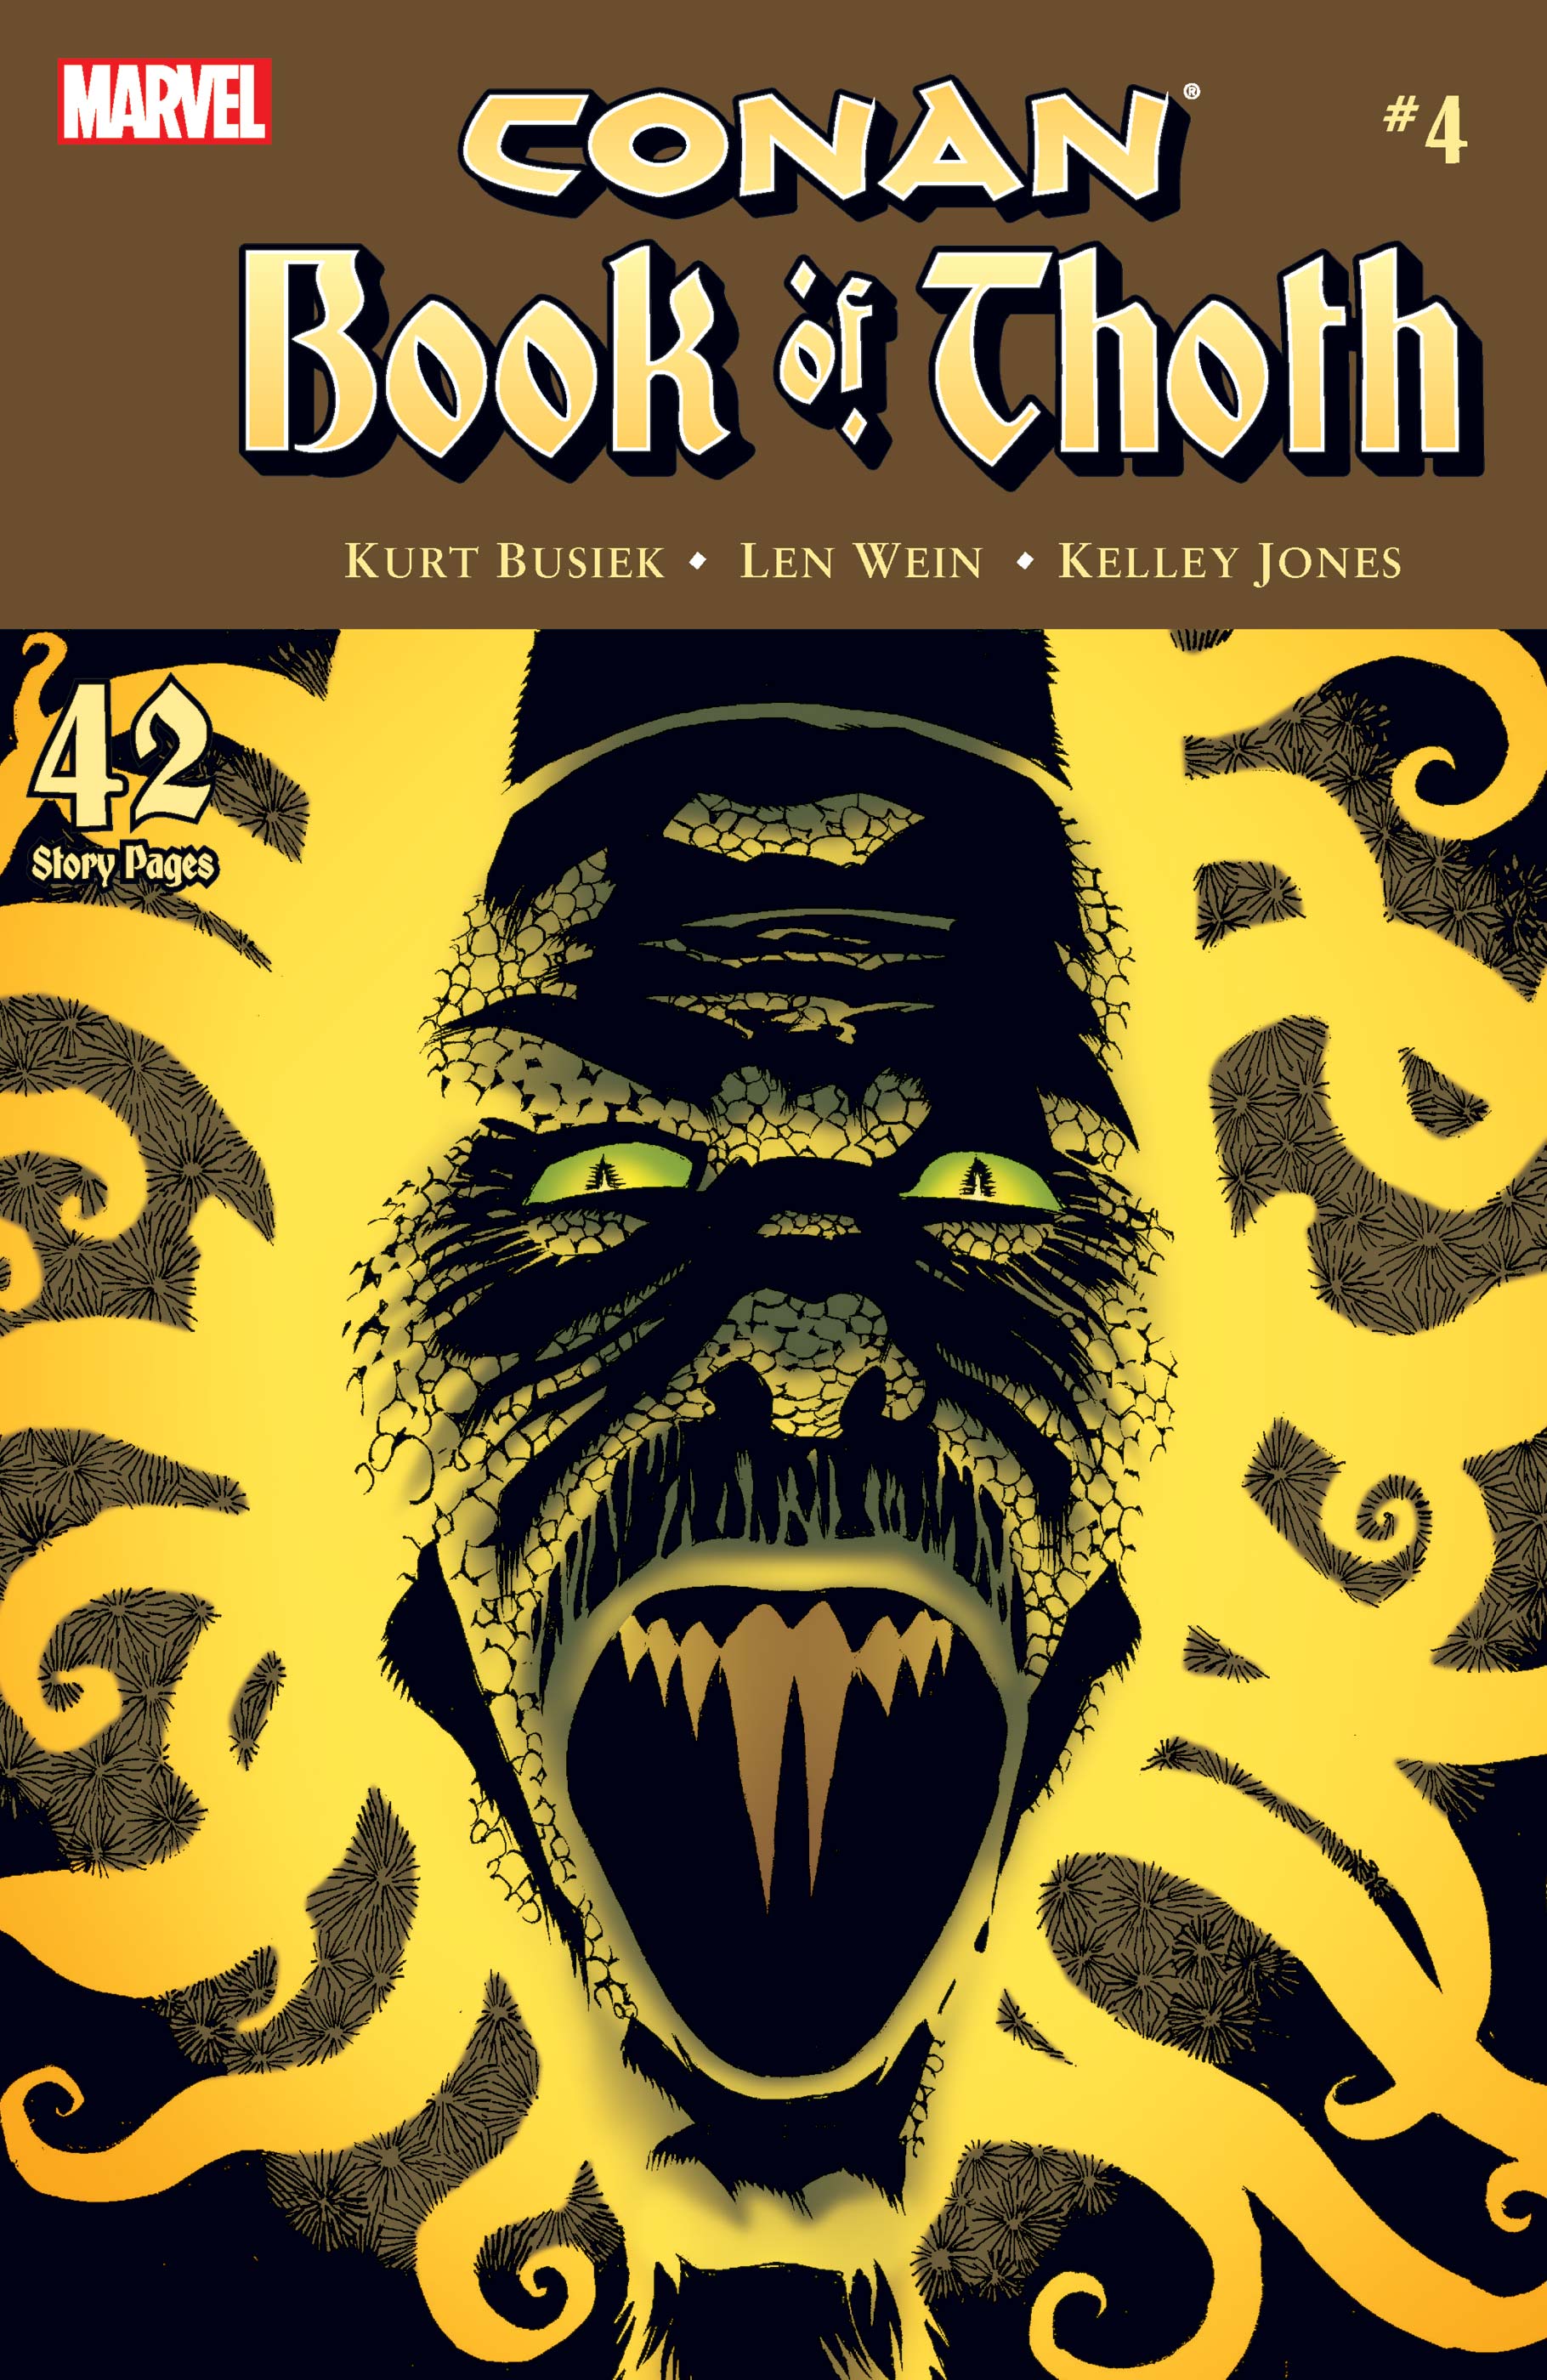 Conan: Book of Thoth (2006) #4